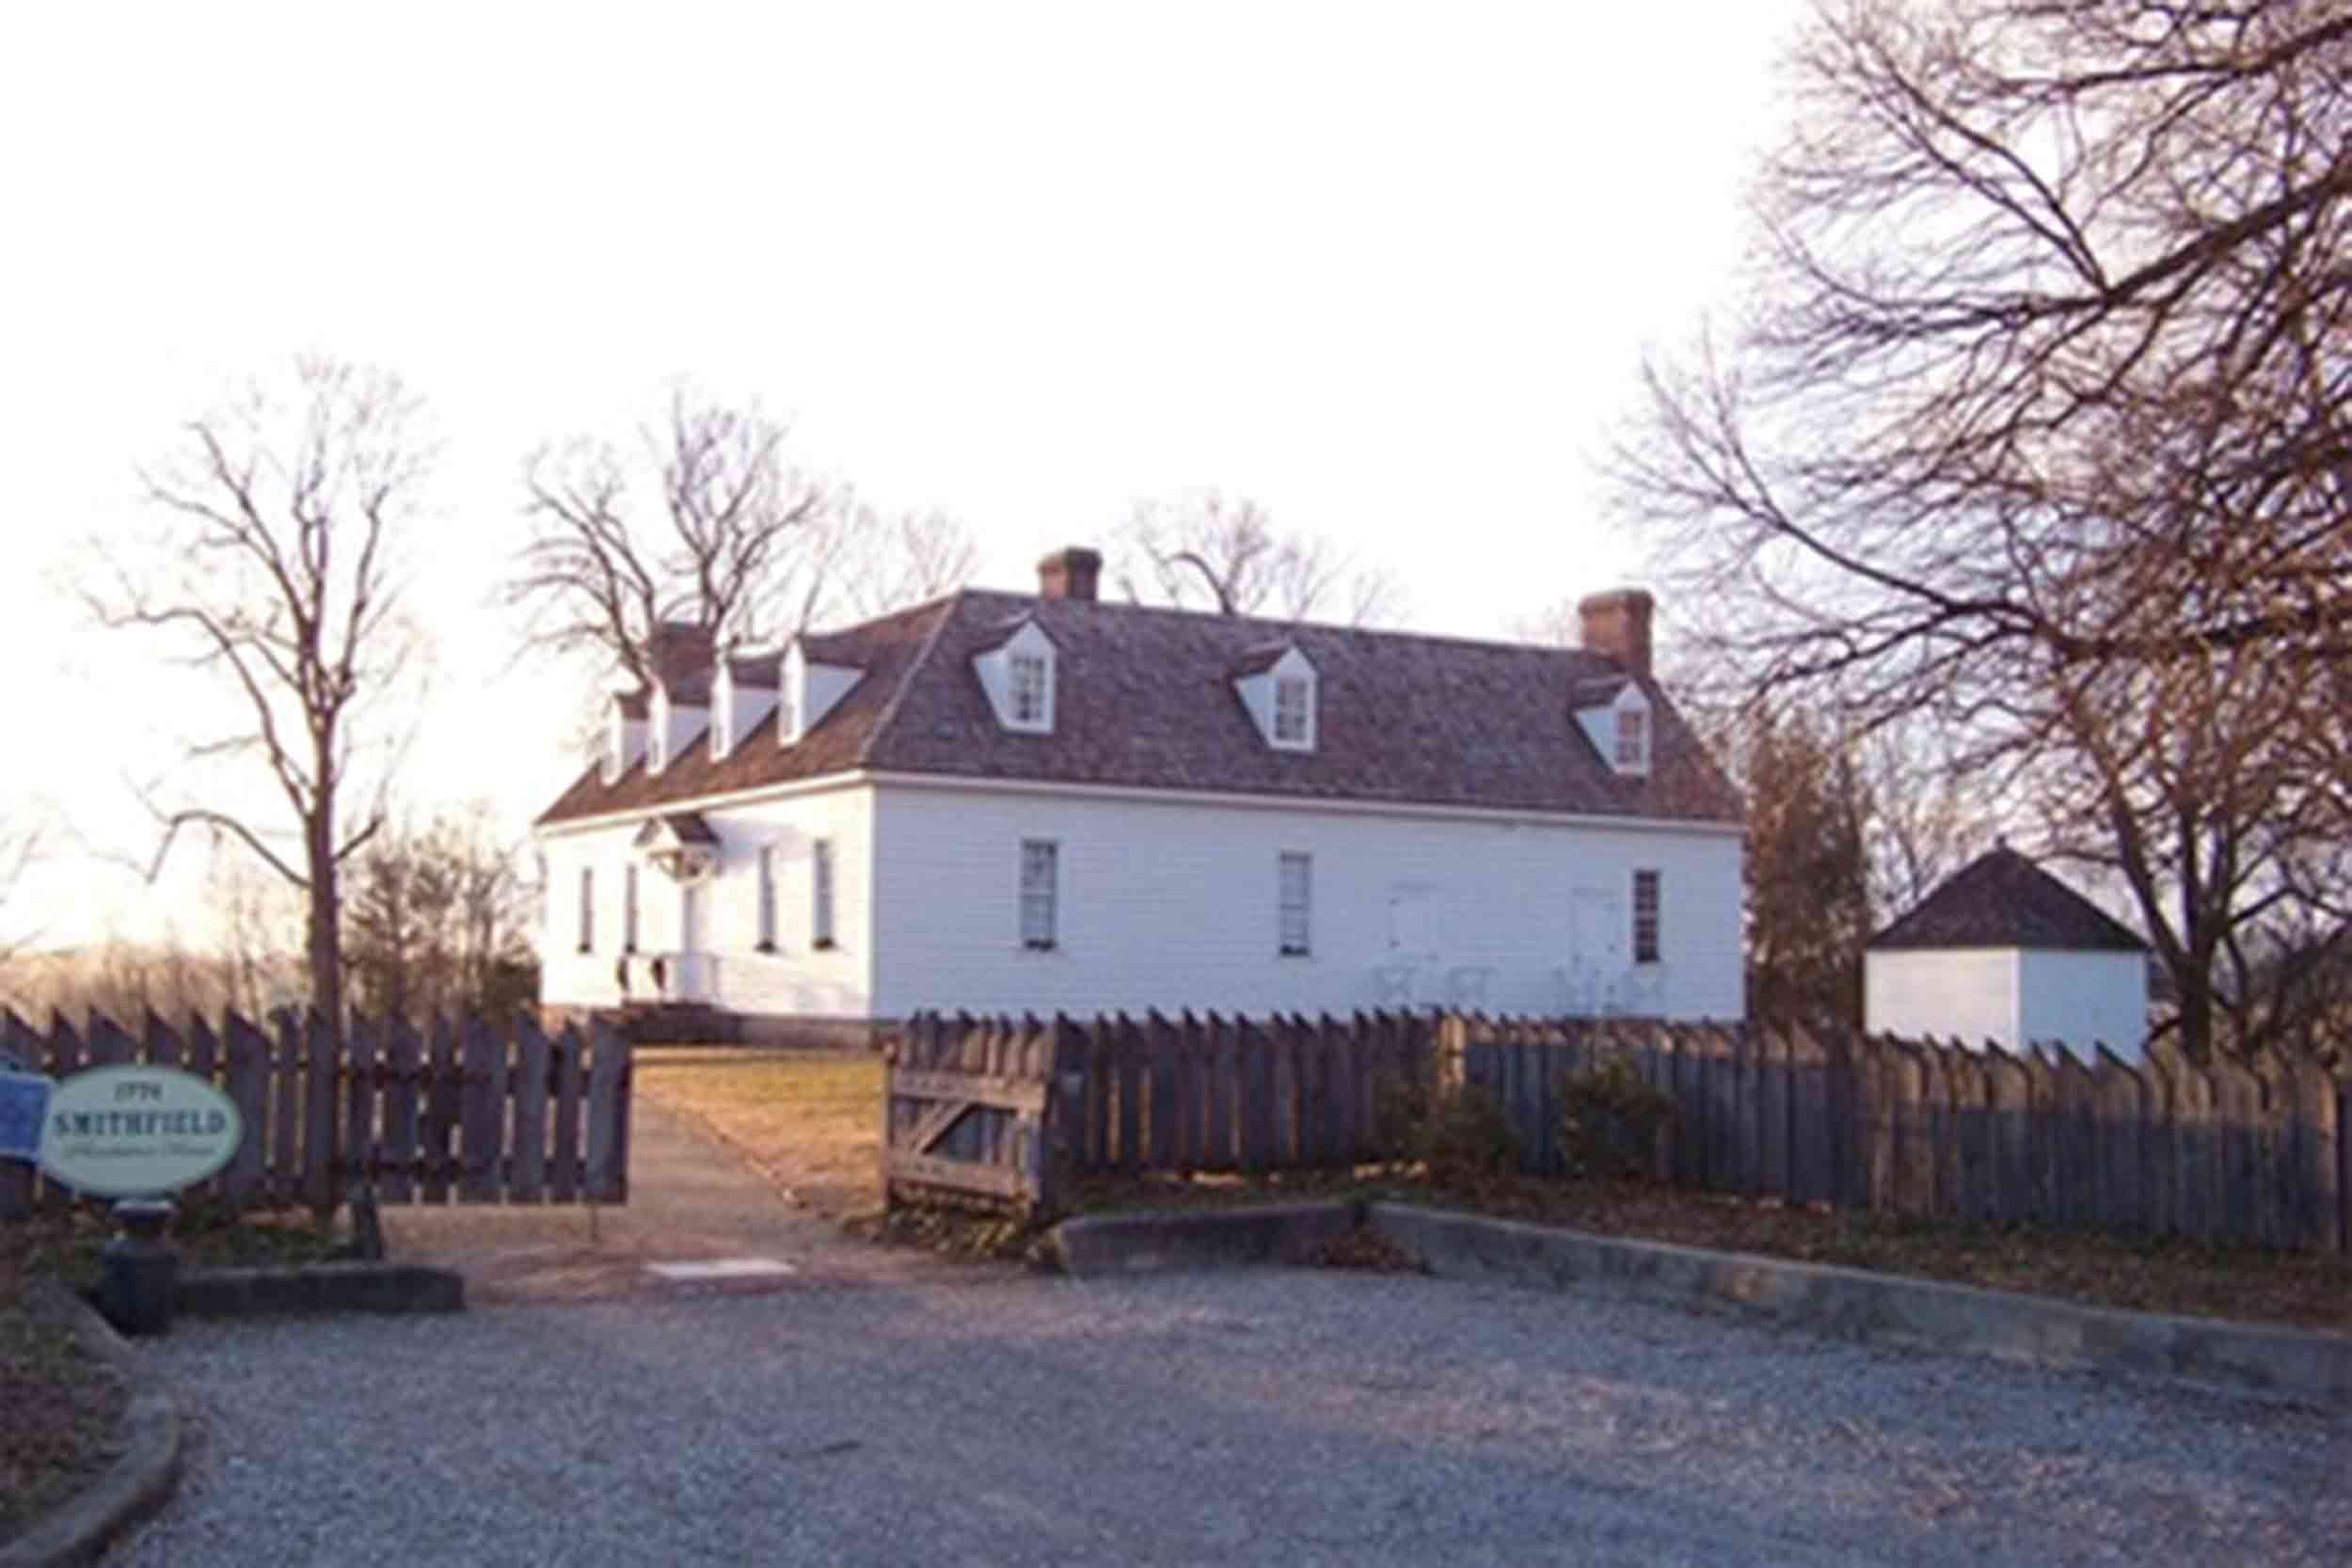 Smithfield Plantation, Blacksburg, Virginia